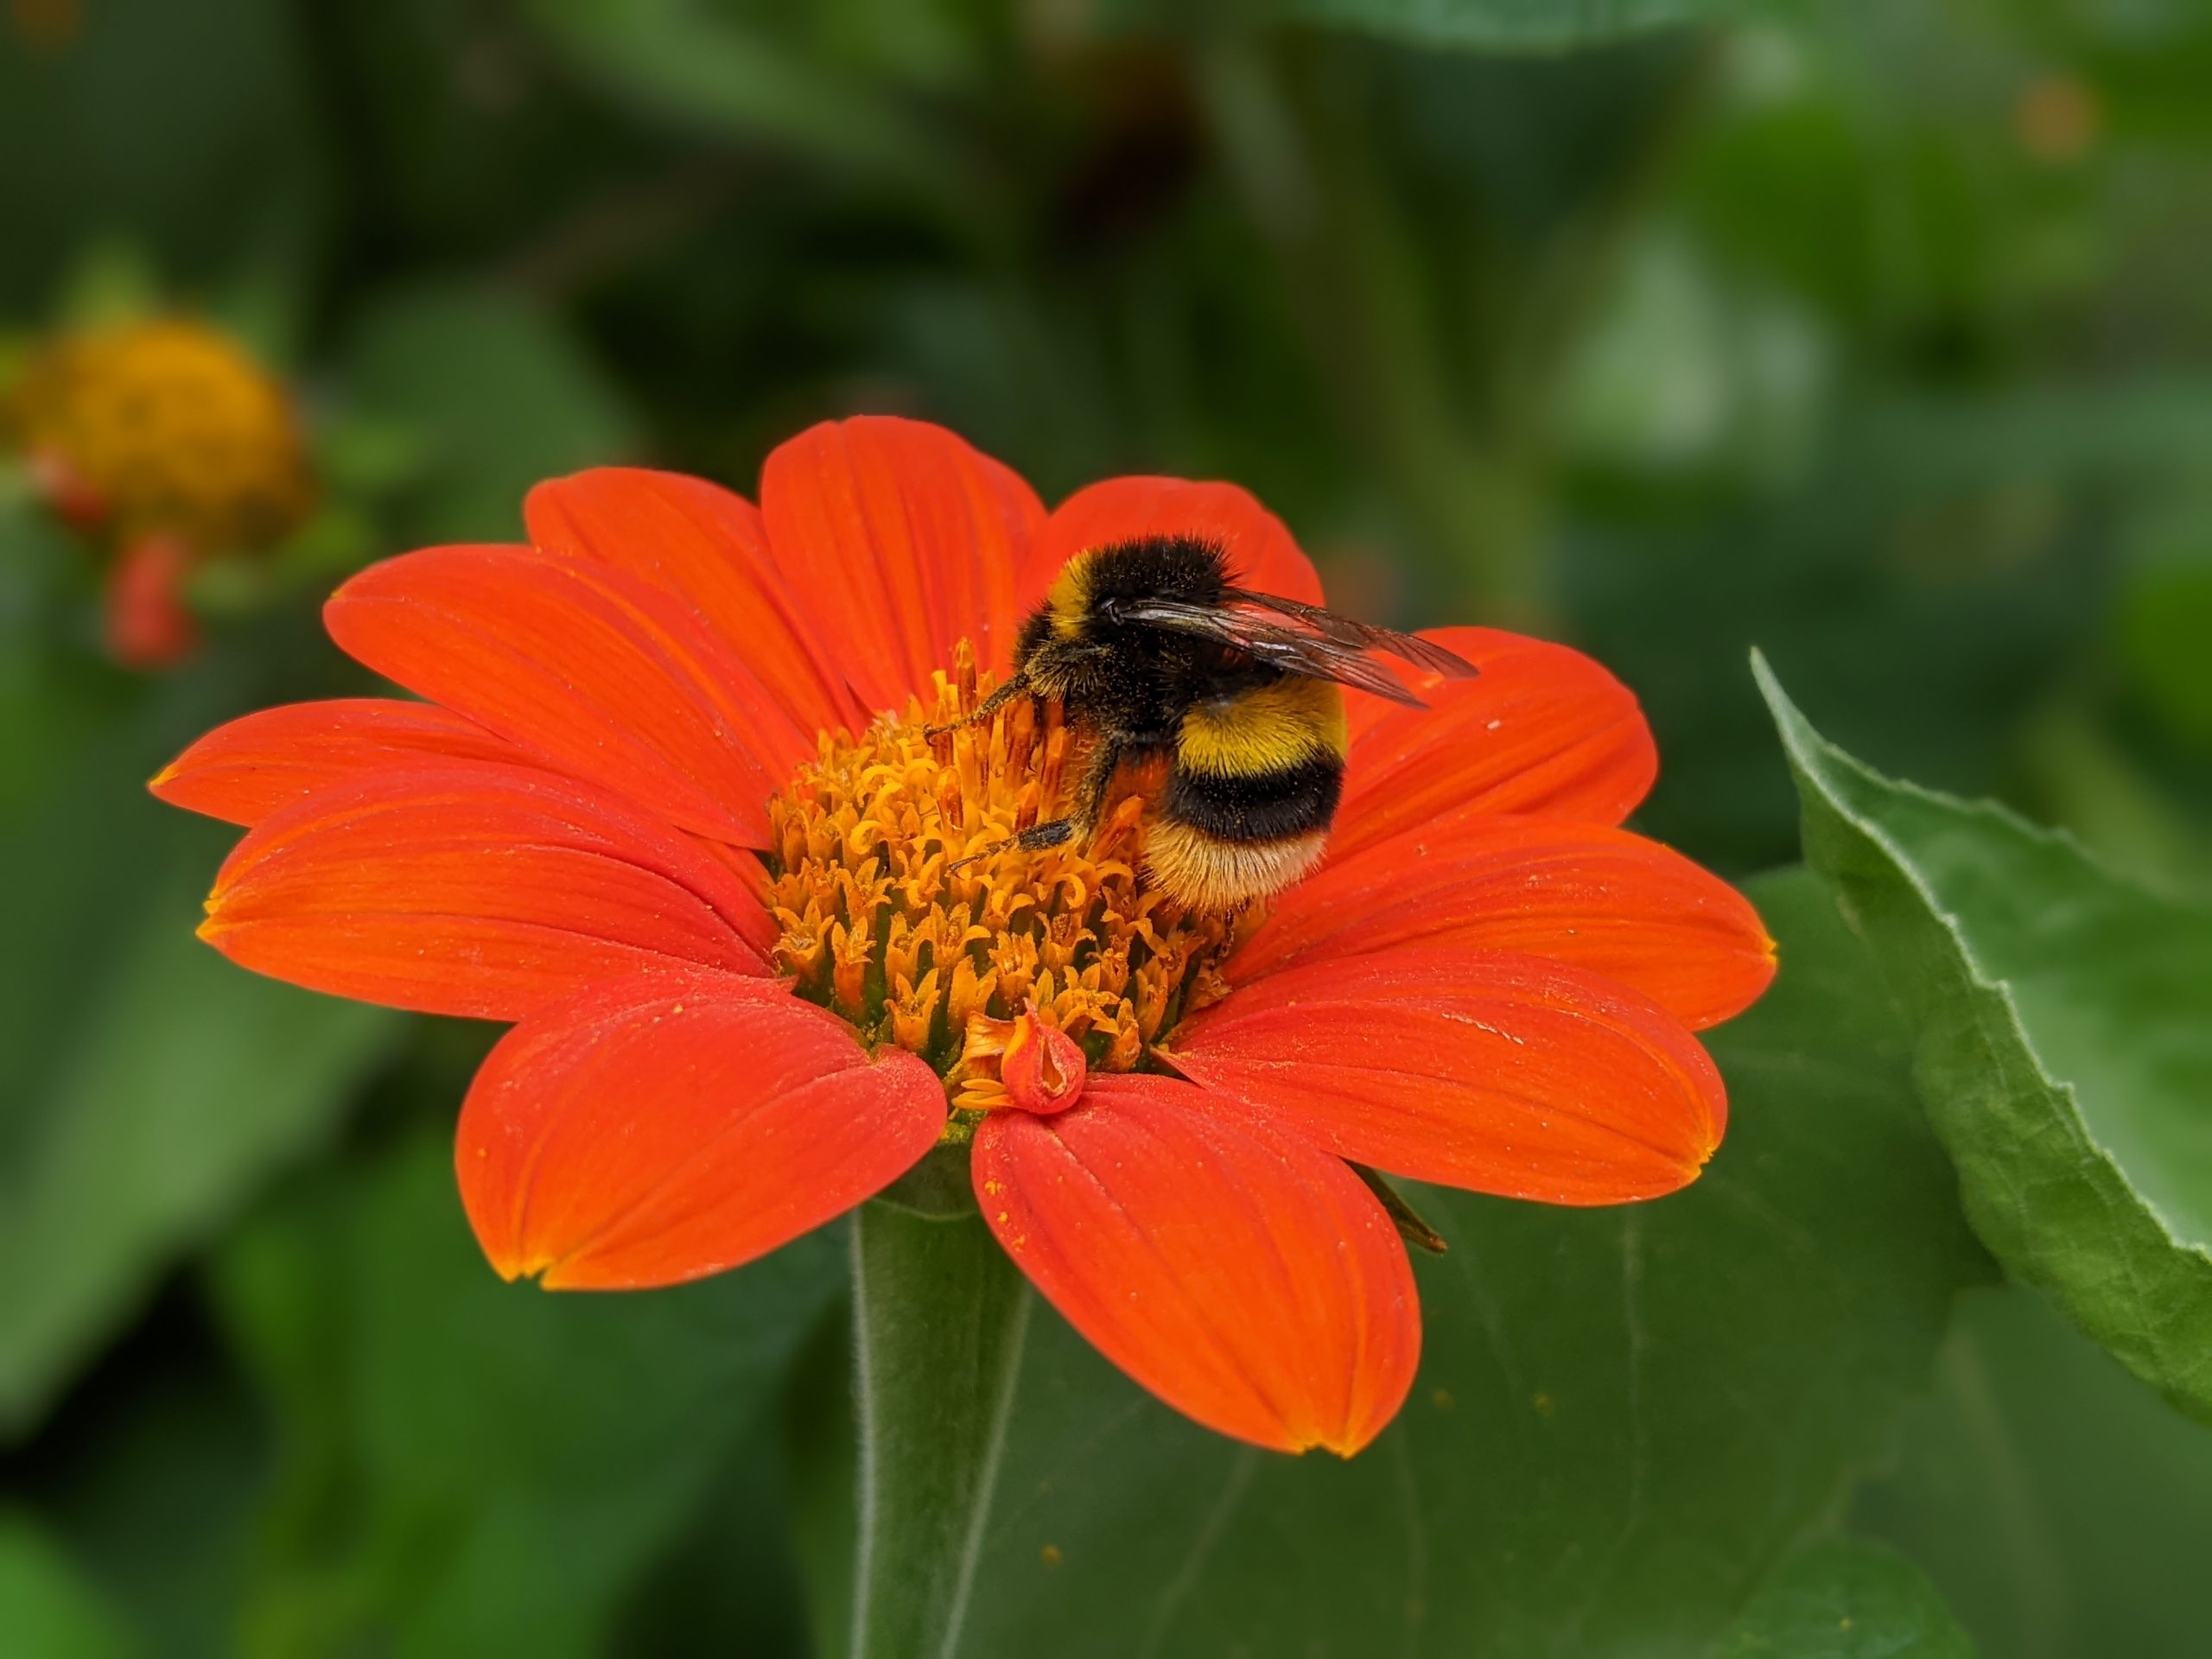 A bumblebee on an orange flower